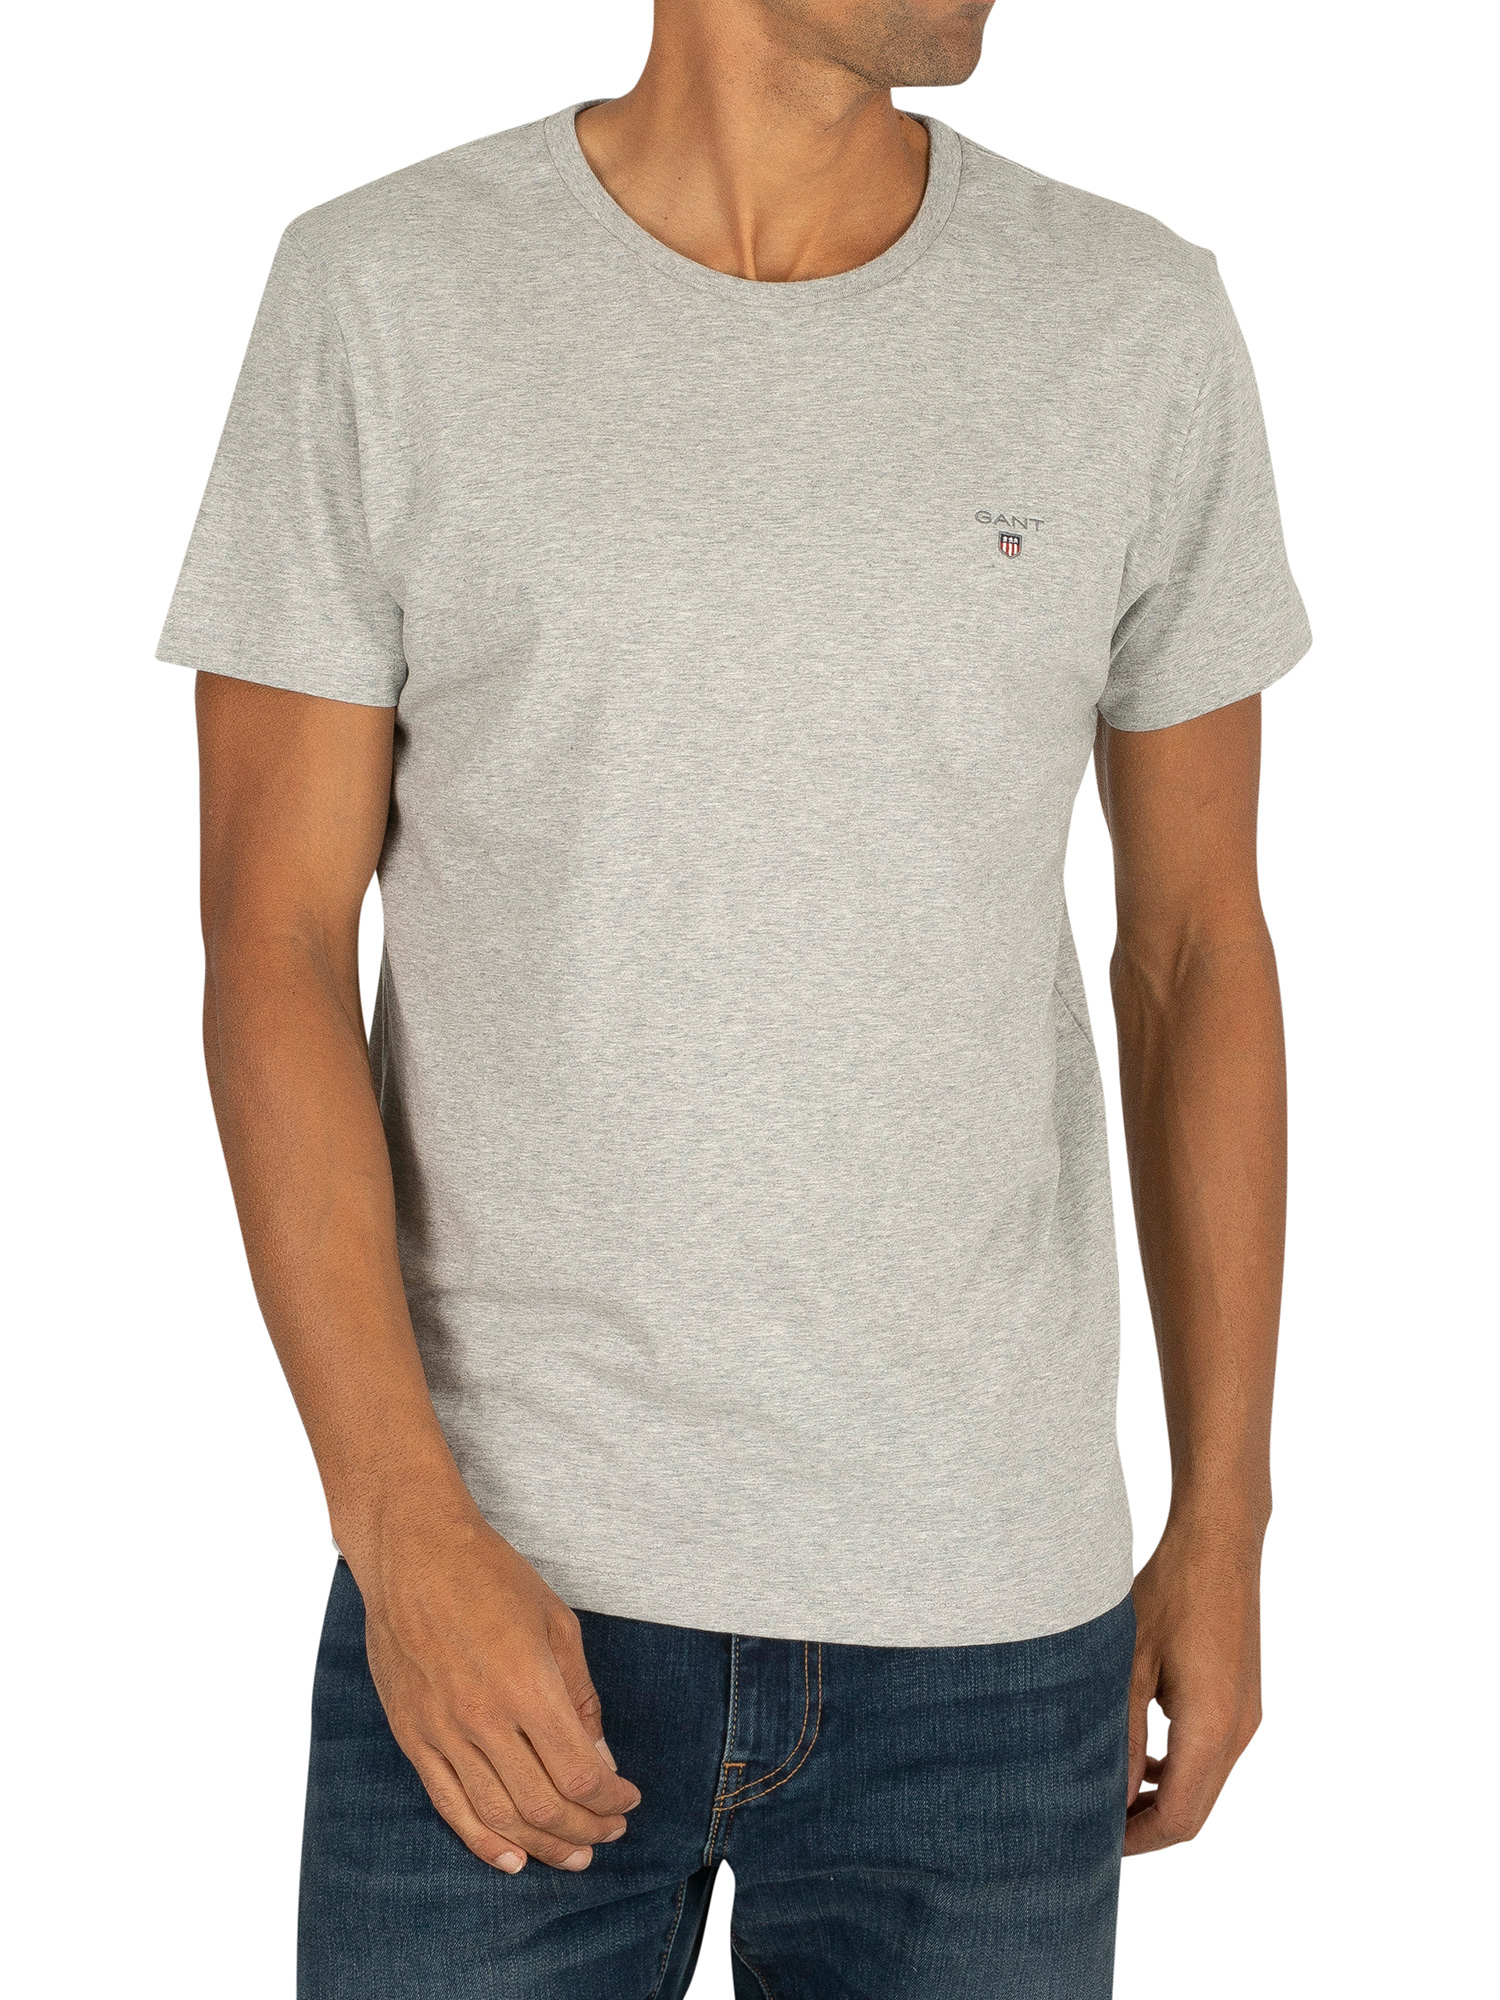 GANT Mens The Original Ls T-Shirt Long Sleeve Top